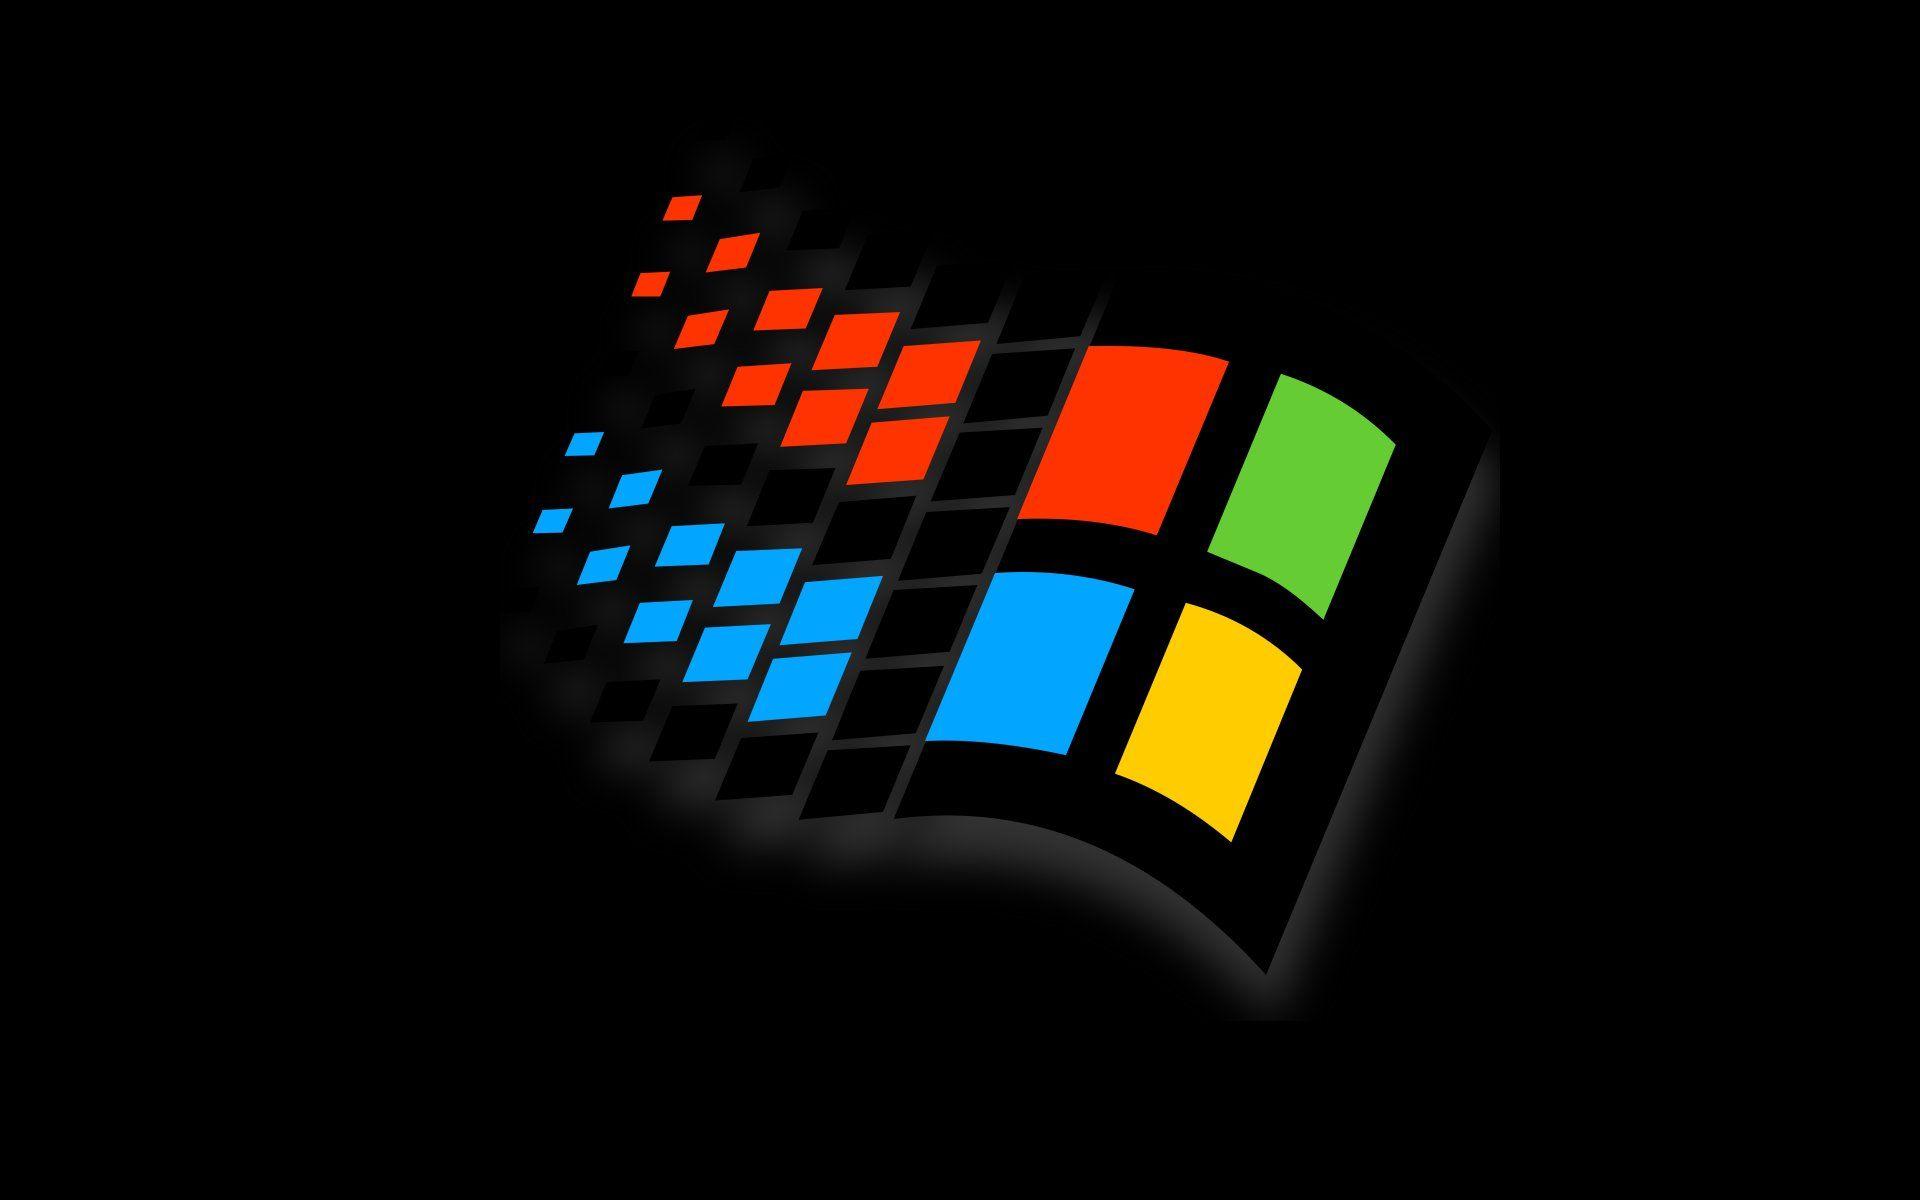 Classic Windows Logo - Installing Windows 98 | Liberate Te Ex Inferis